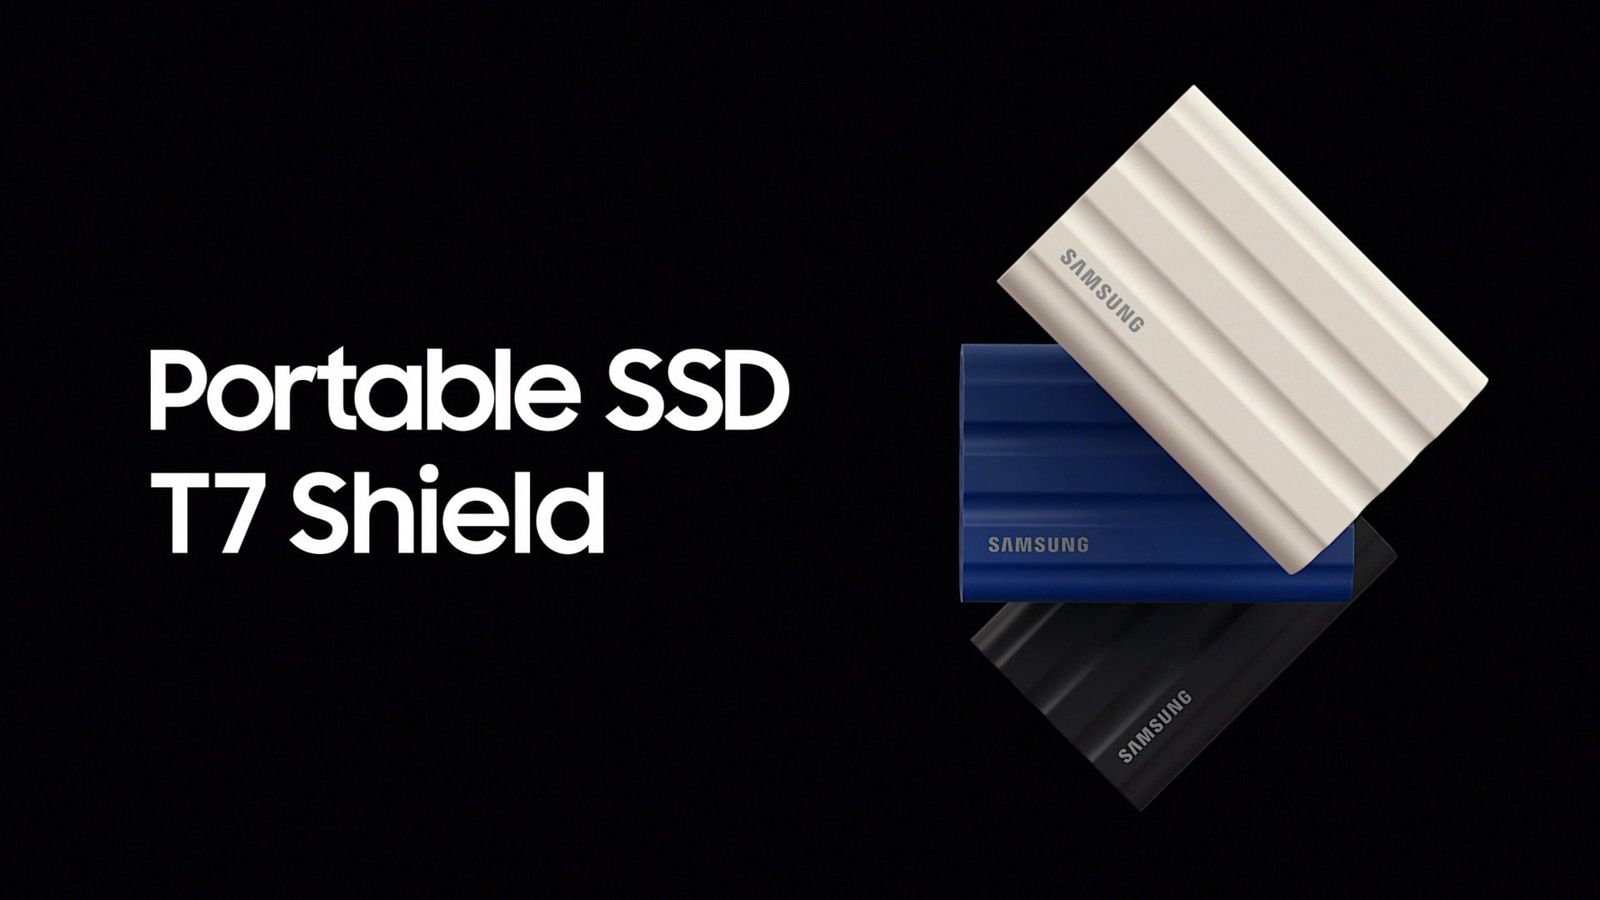 Samsung Launches New T7 Shield Portable SSD - MacRumors